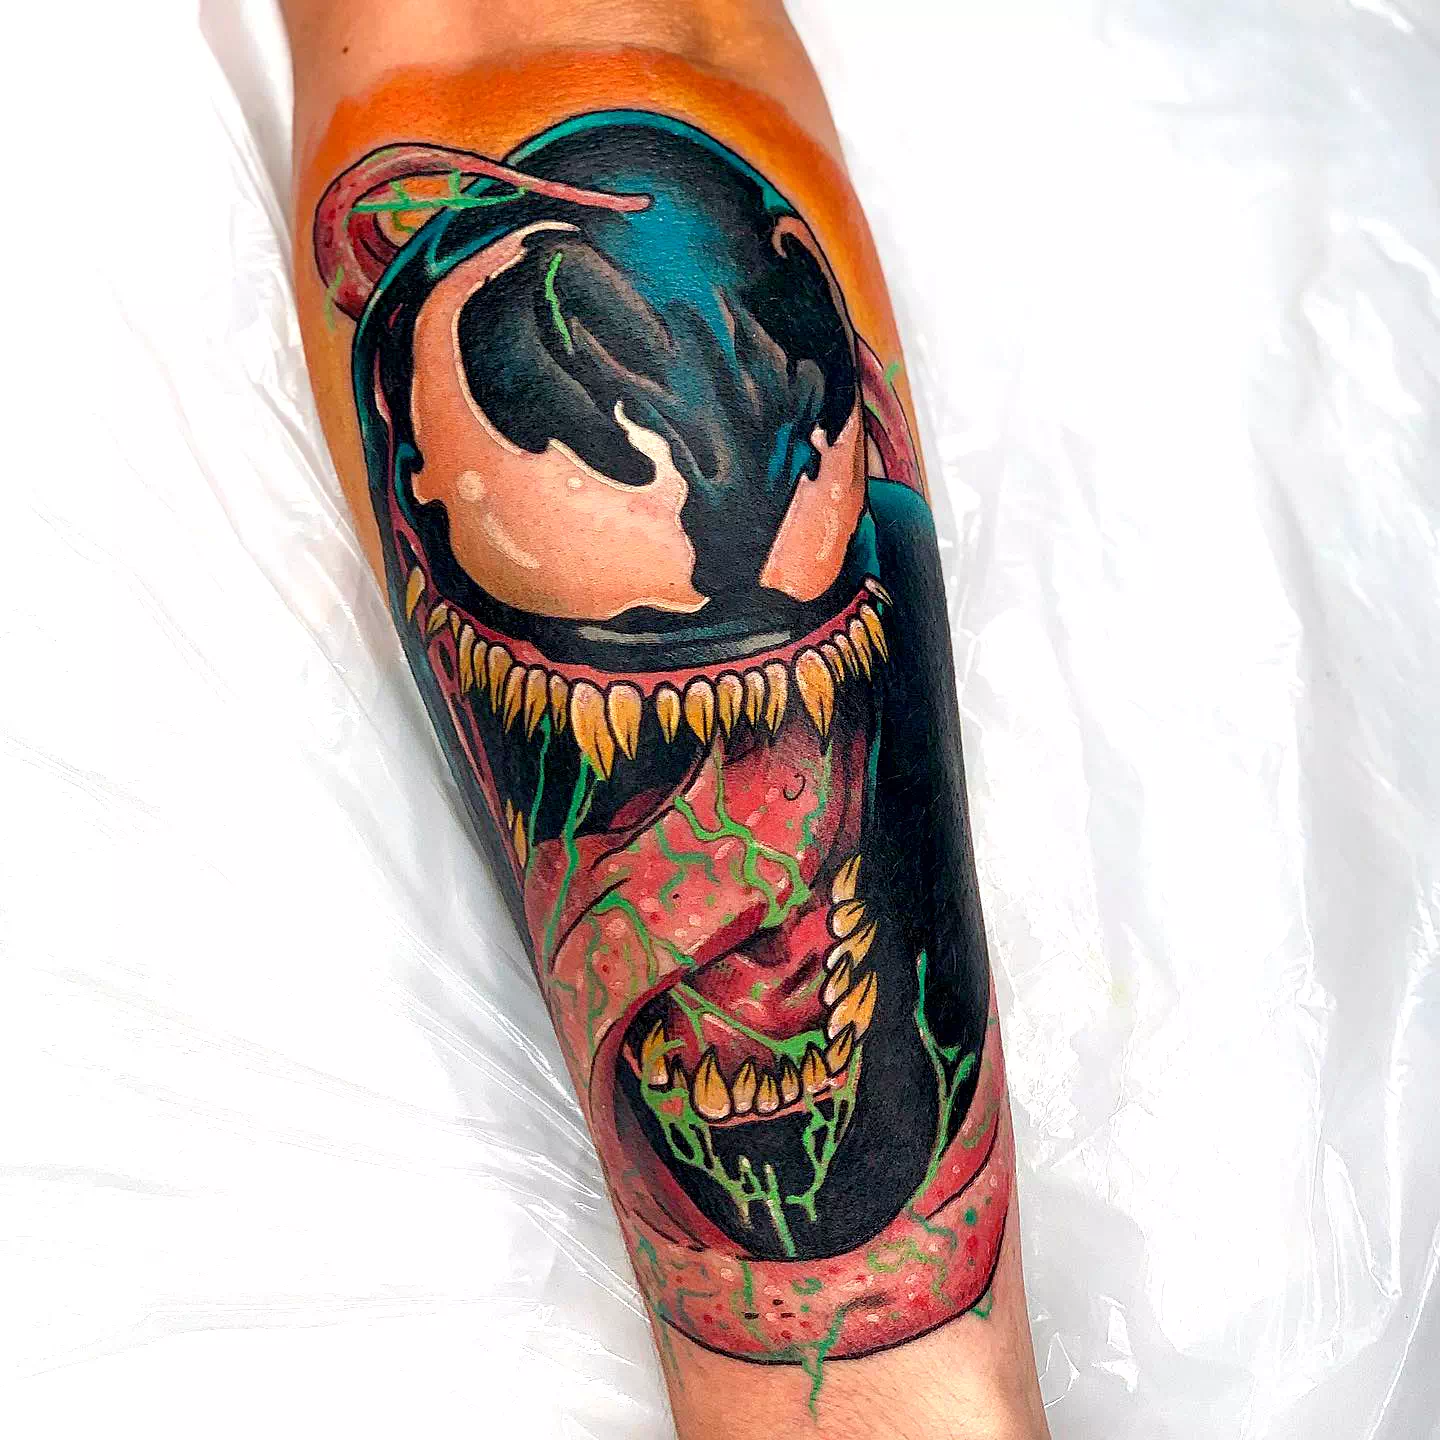 Wilde Venom Tattoos 7